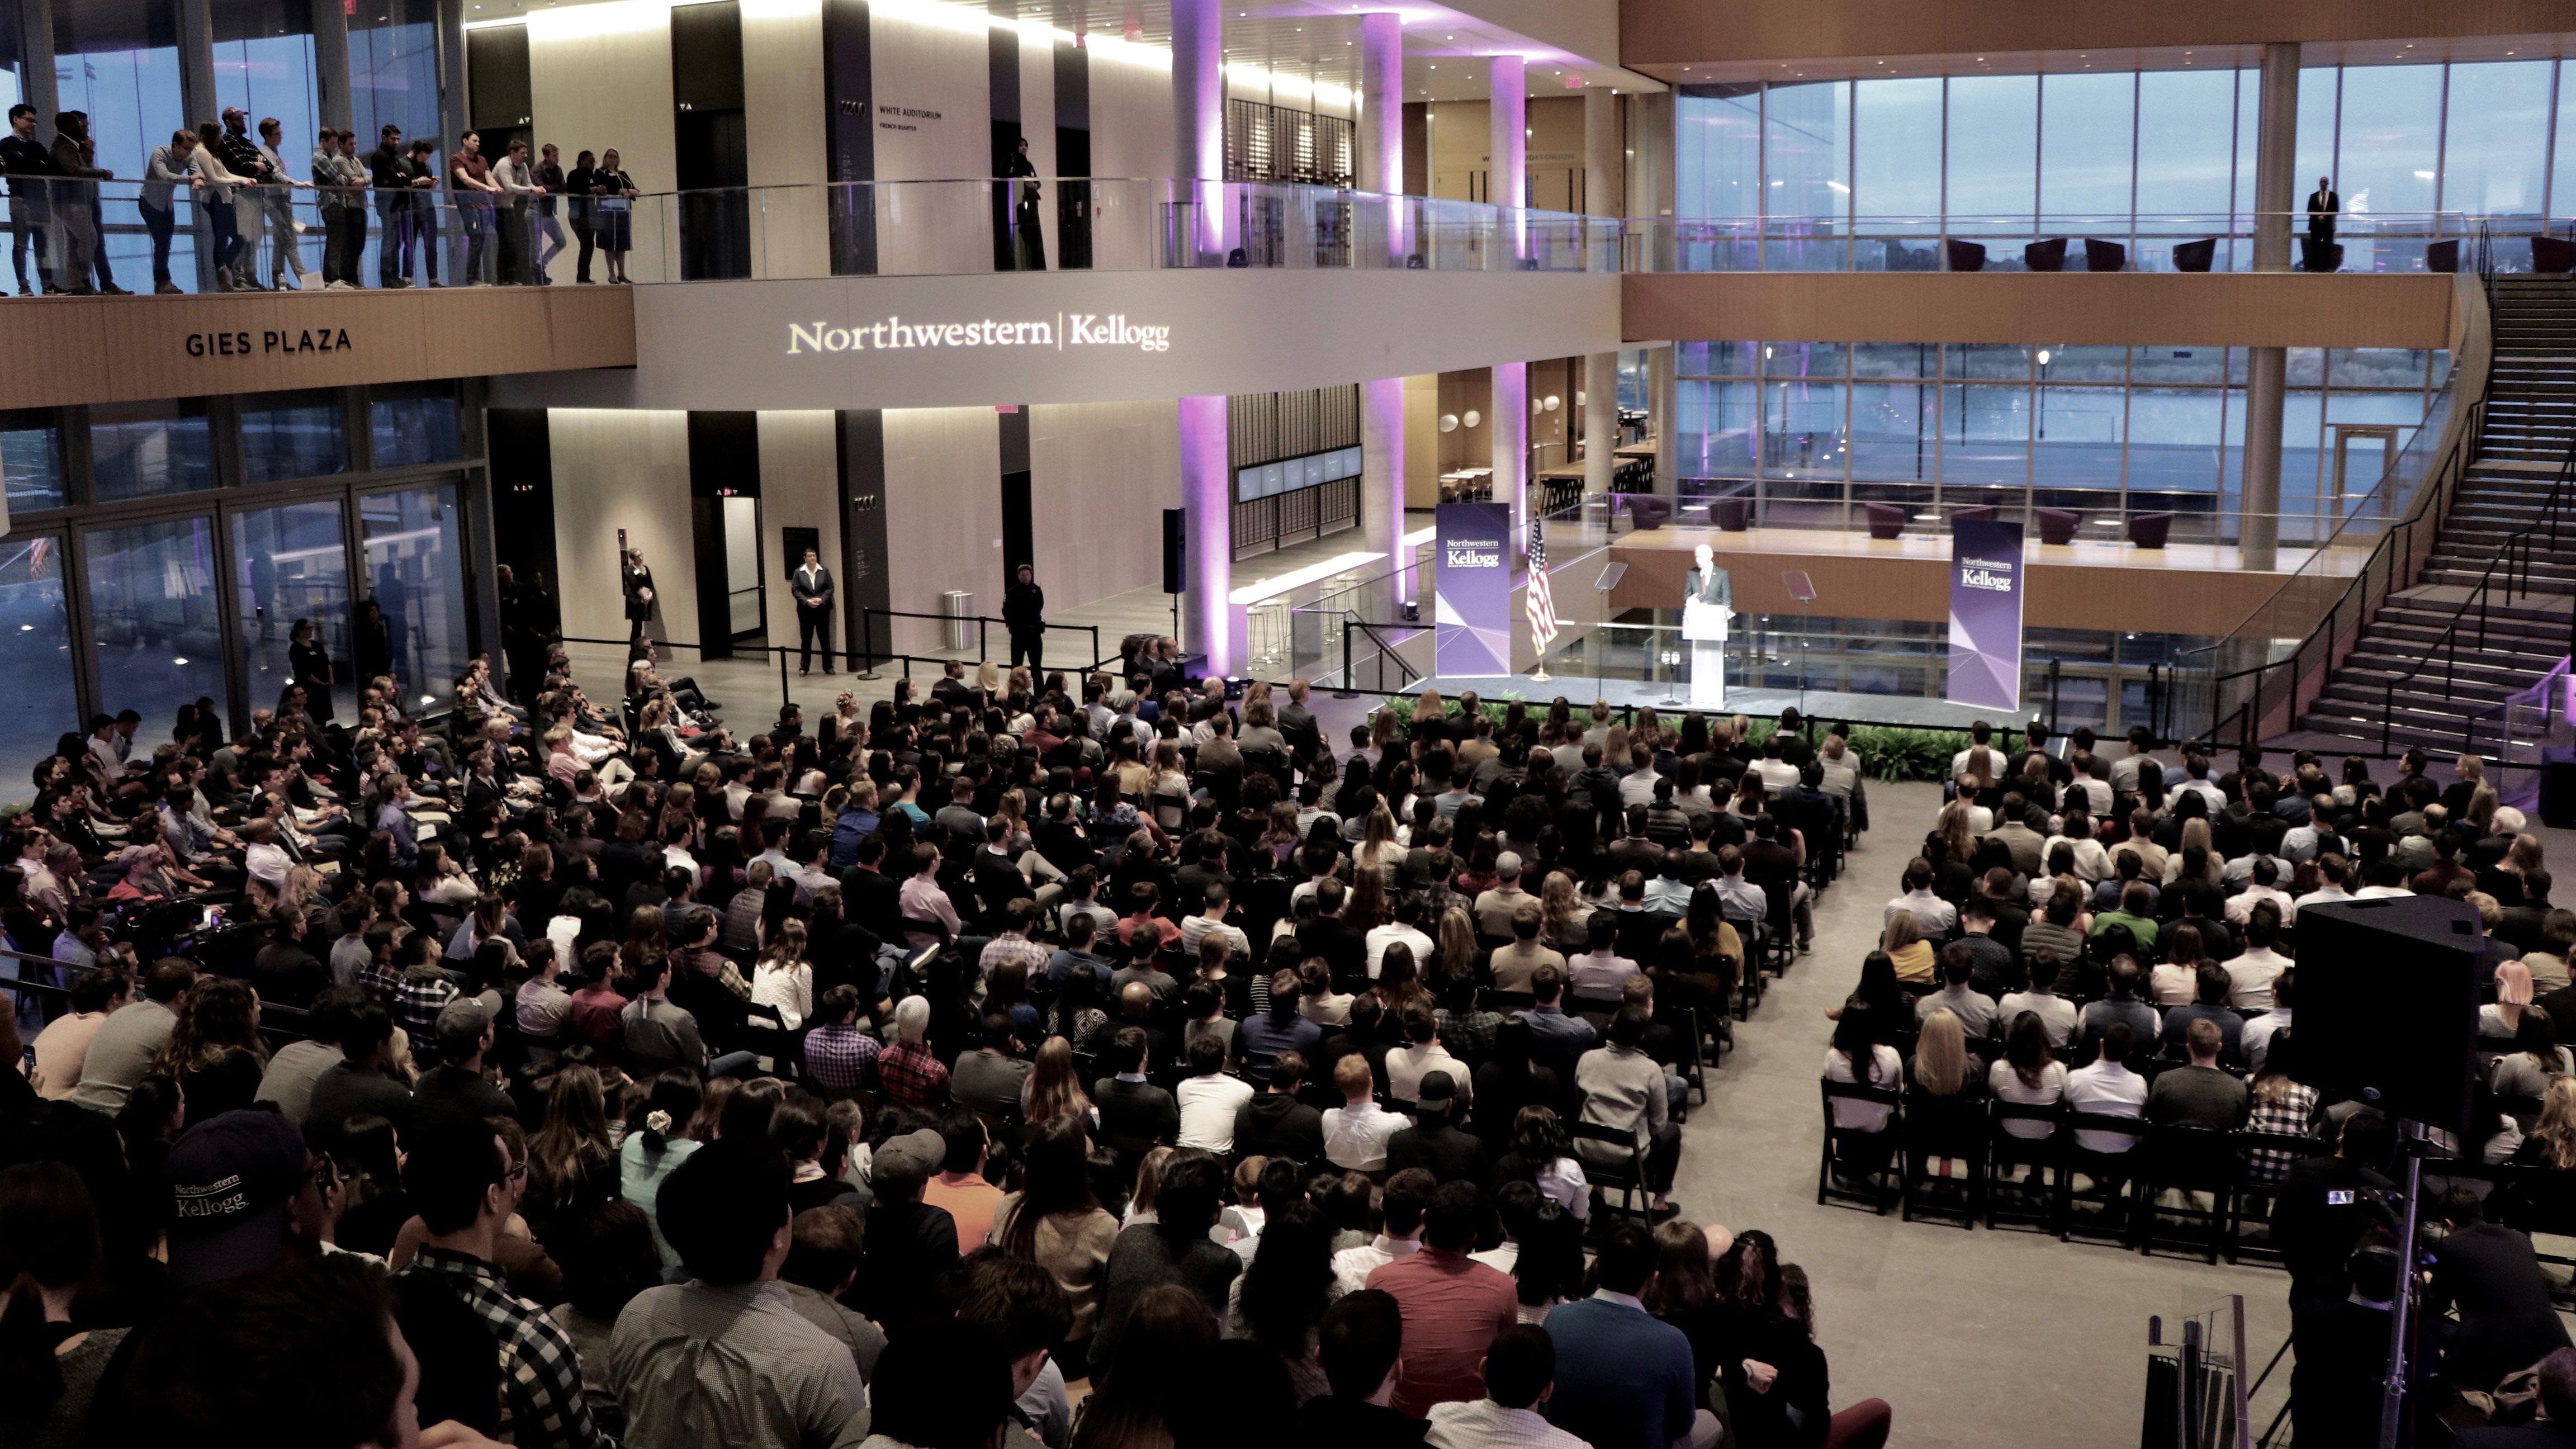 A sold-out crowd gathers at Northwestern's Kellogg Global Hub to hear former Vice President Joe Biden speak. (Evan Garcia / Chicago Tonight)